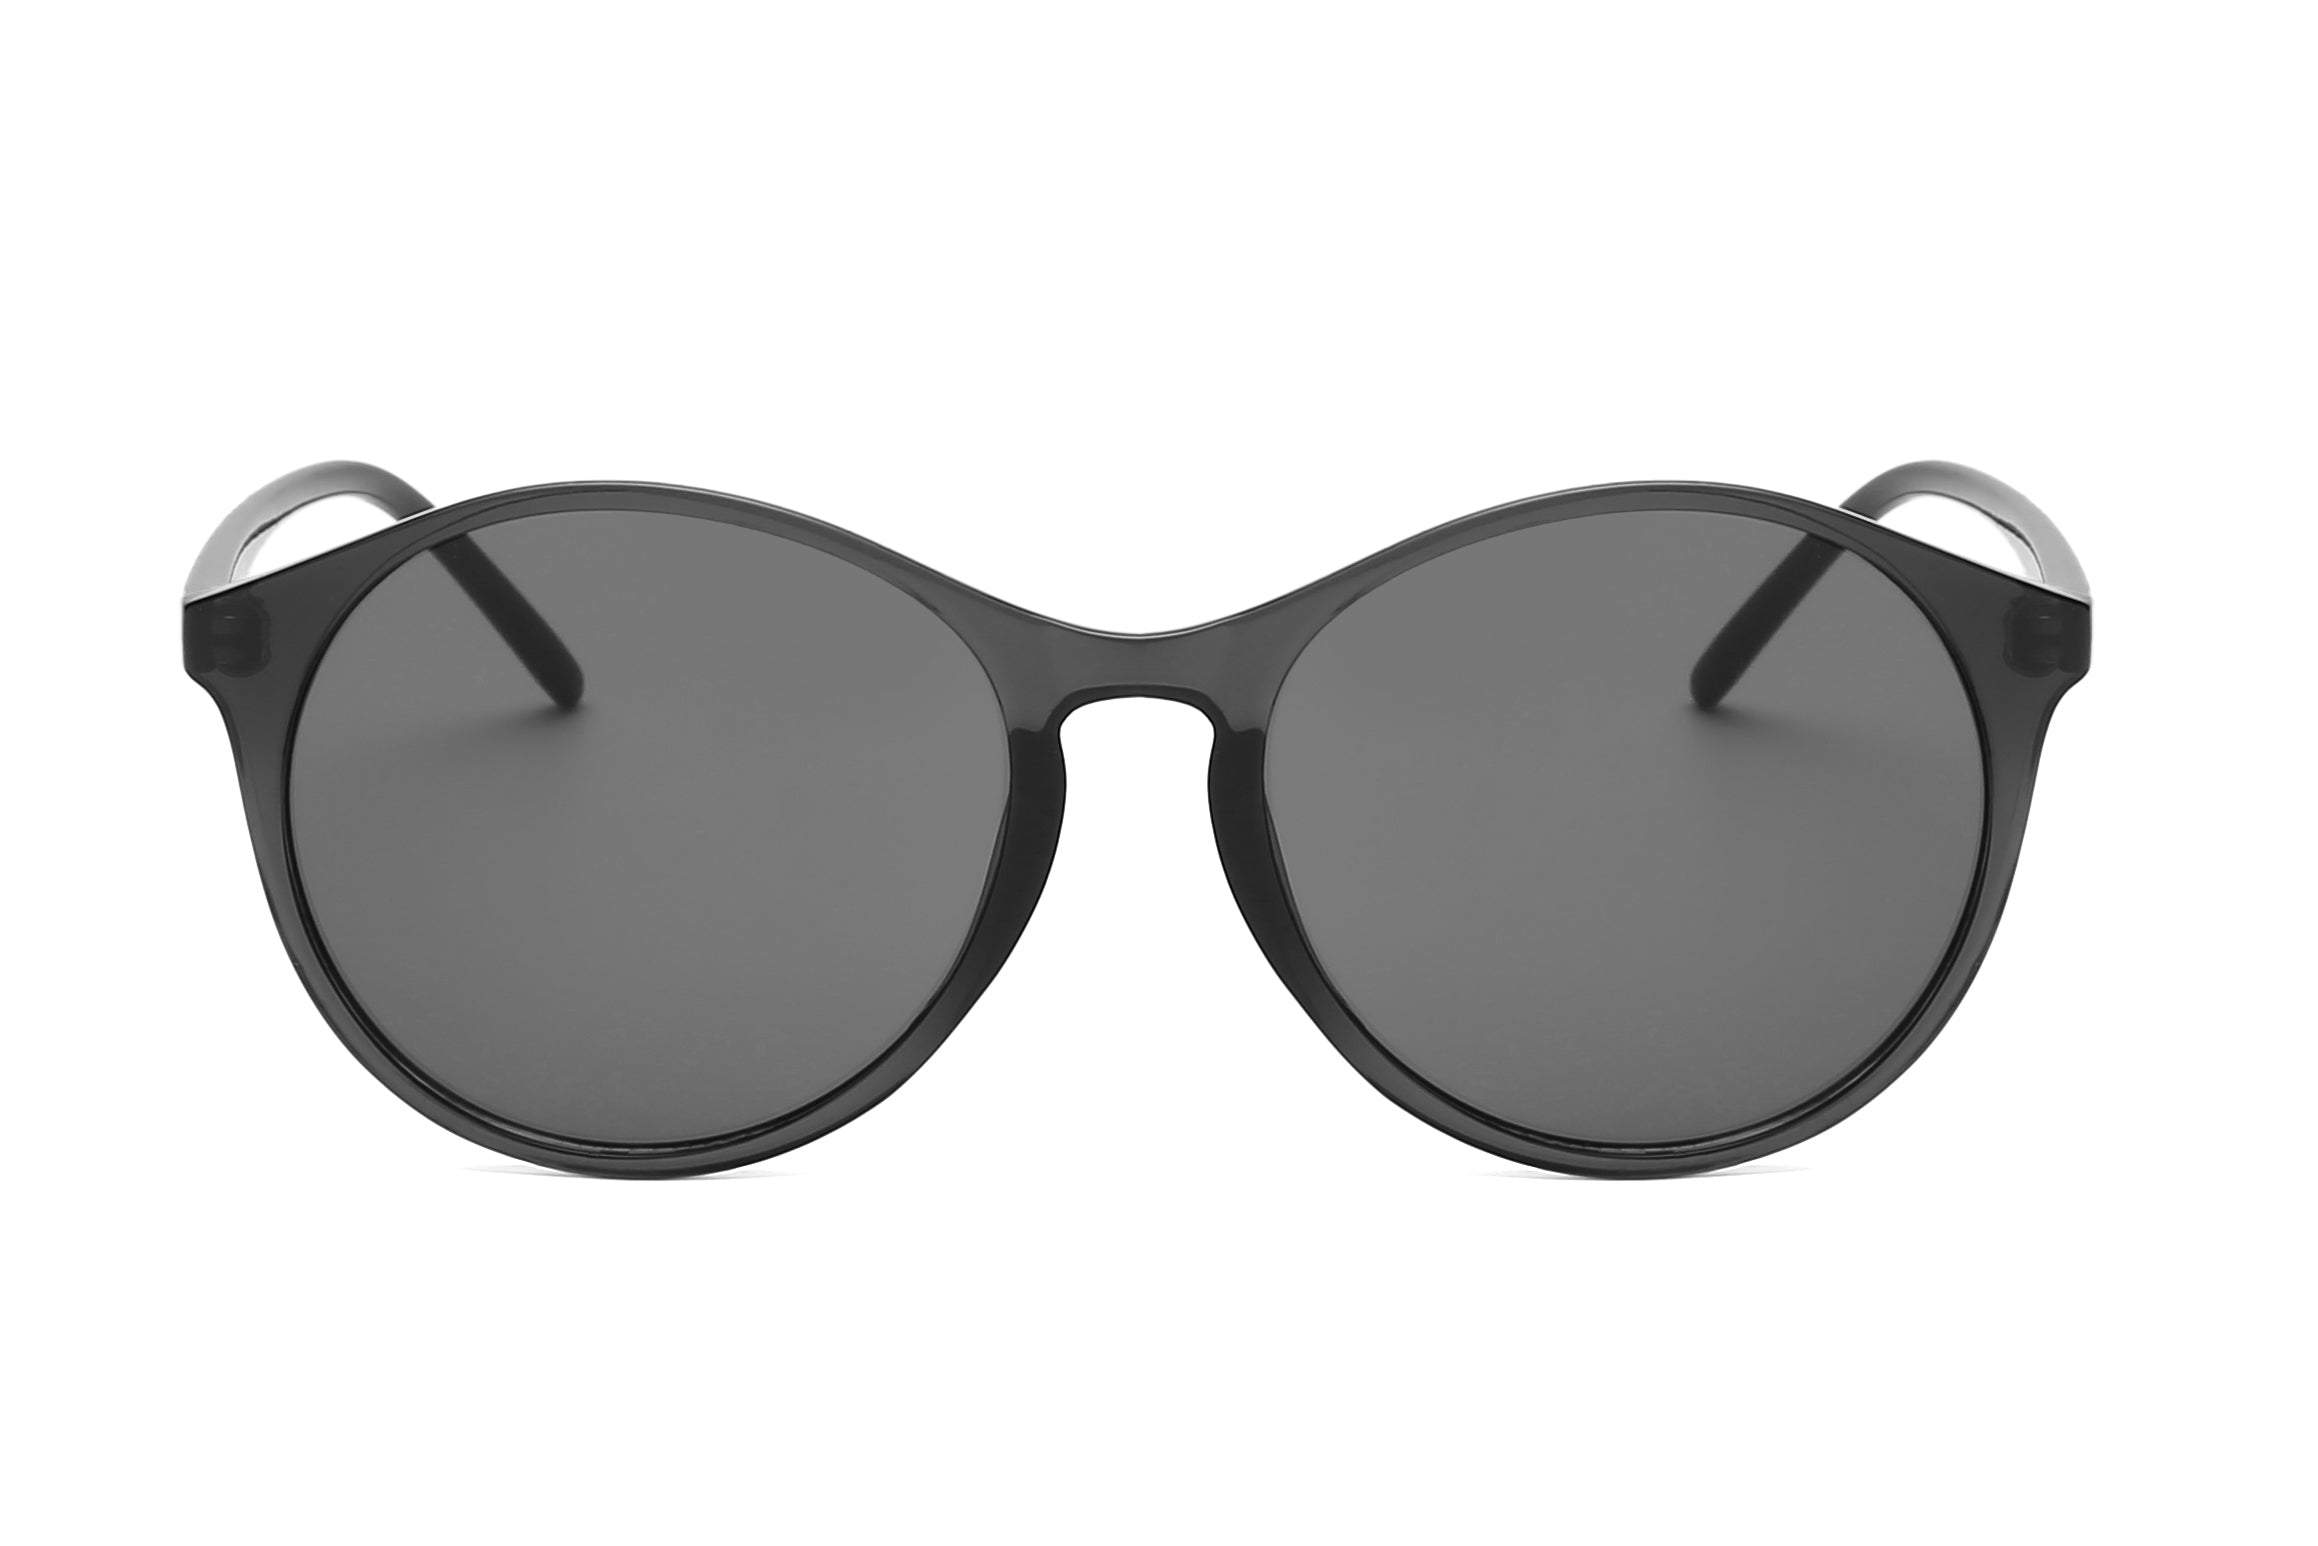 S1129 - Women Round Fashion Sunglasses - Iris Fashion Inc. | Wholesale Sunglasses and Glasses